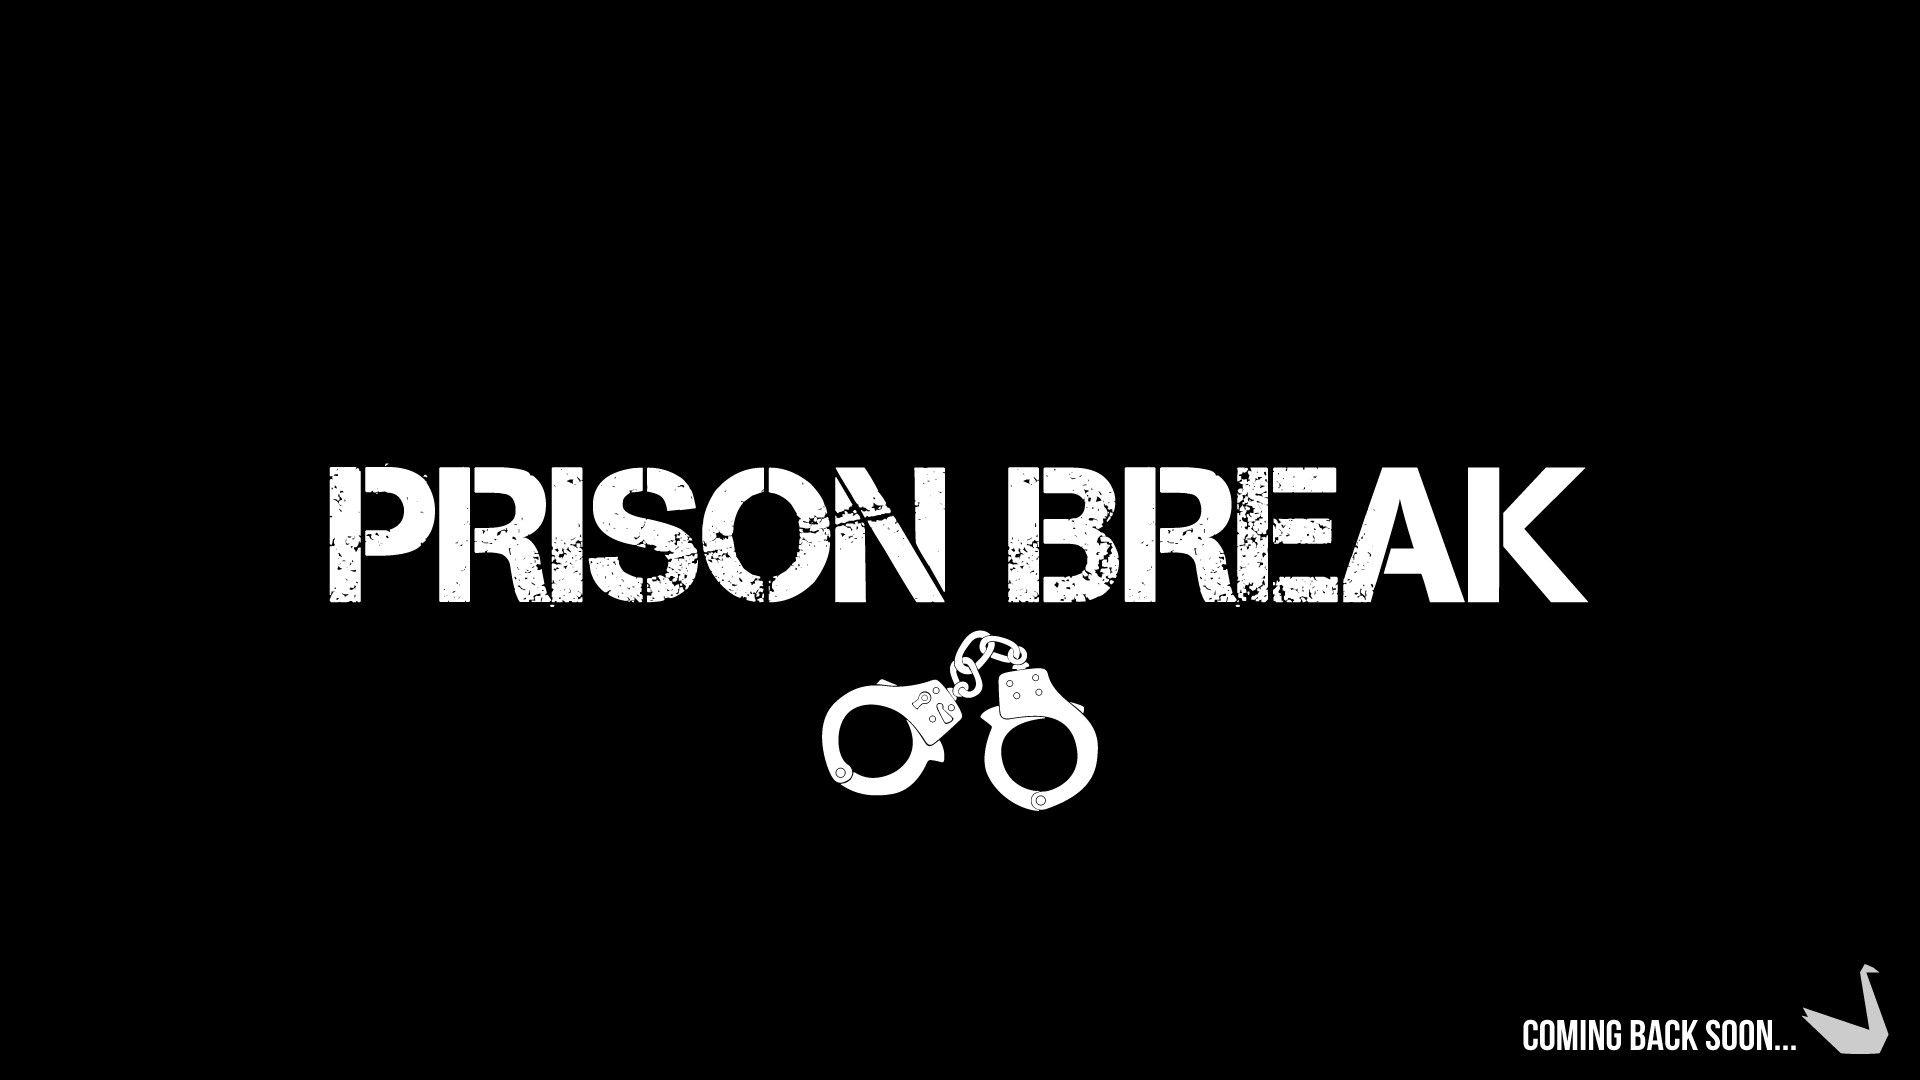 Download the Prison Break Wallpaper, Prison Break iPhone Wallpaper